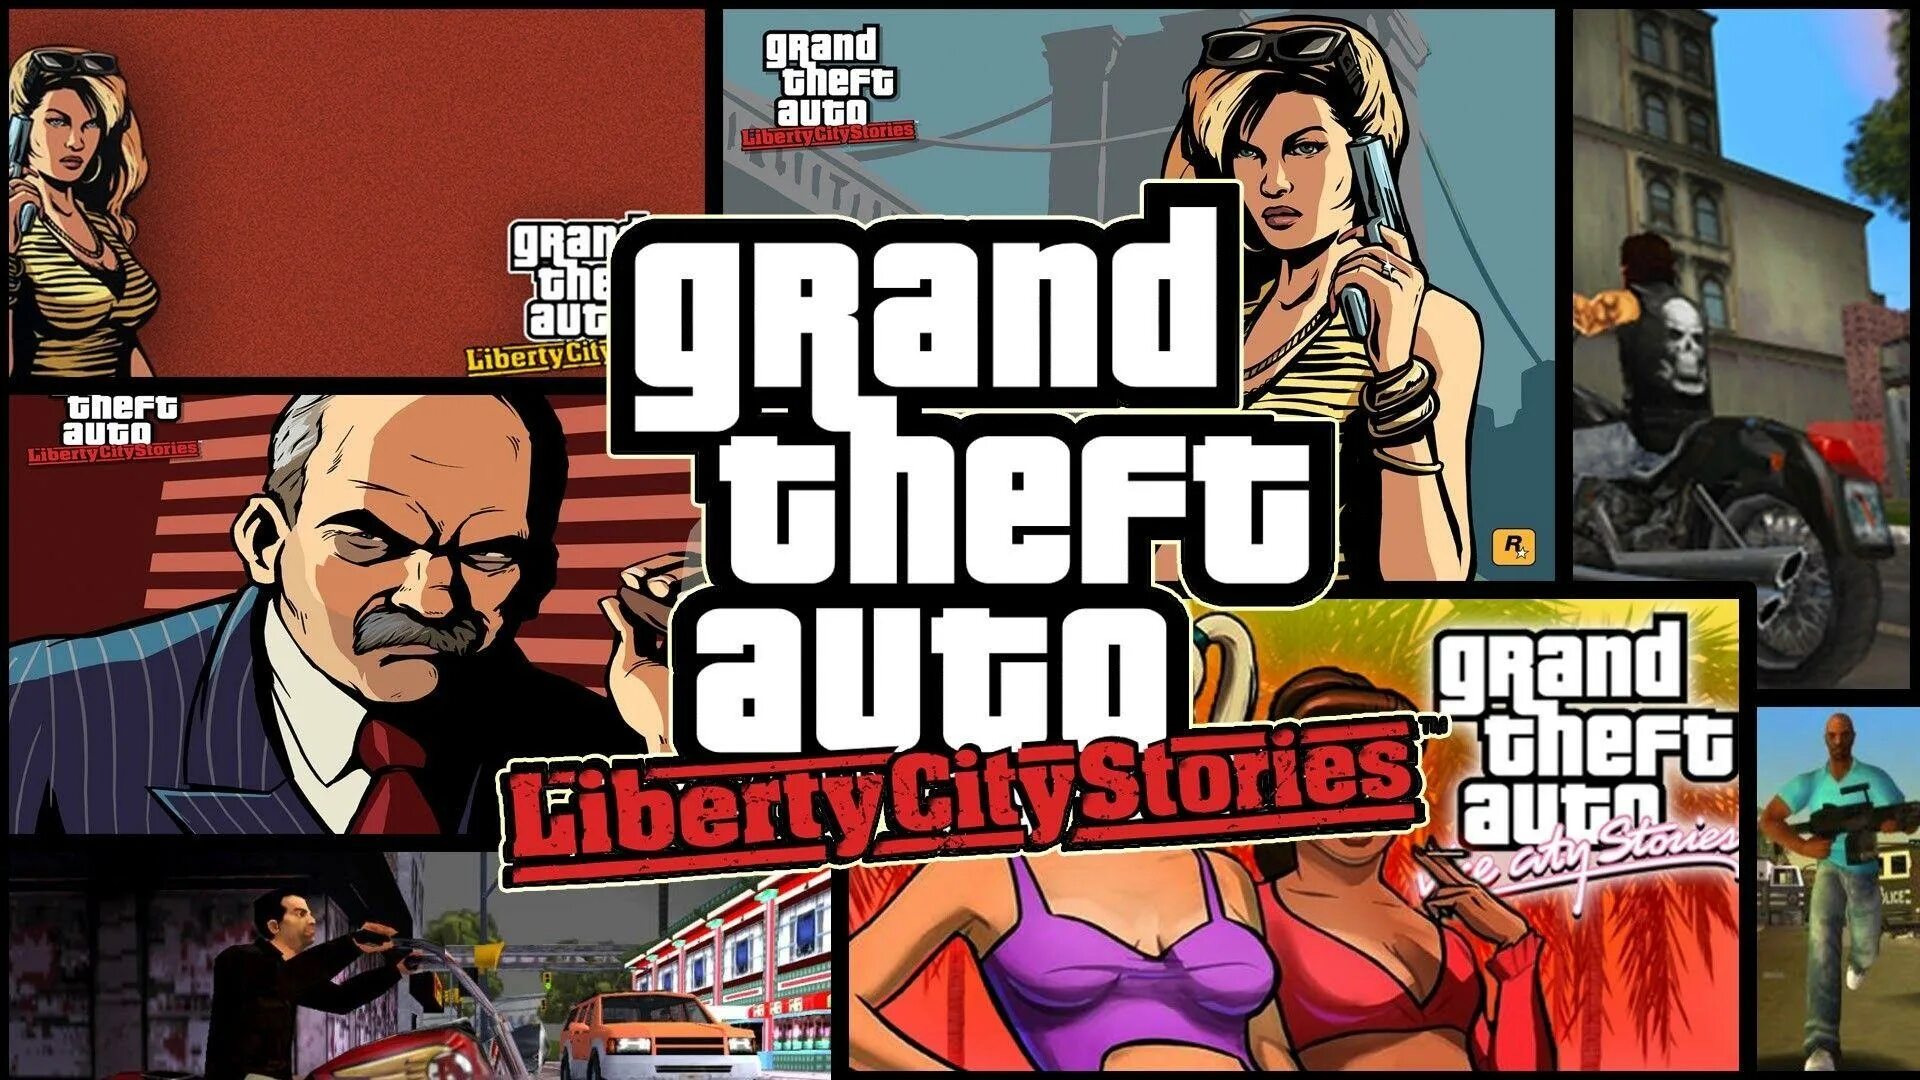 Gta liberty city. GTA Liberty City stories. Grand Theft auto Liberty City stories обложка. GTA Liberty City stories обои. ГТА Сити сториес.